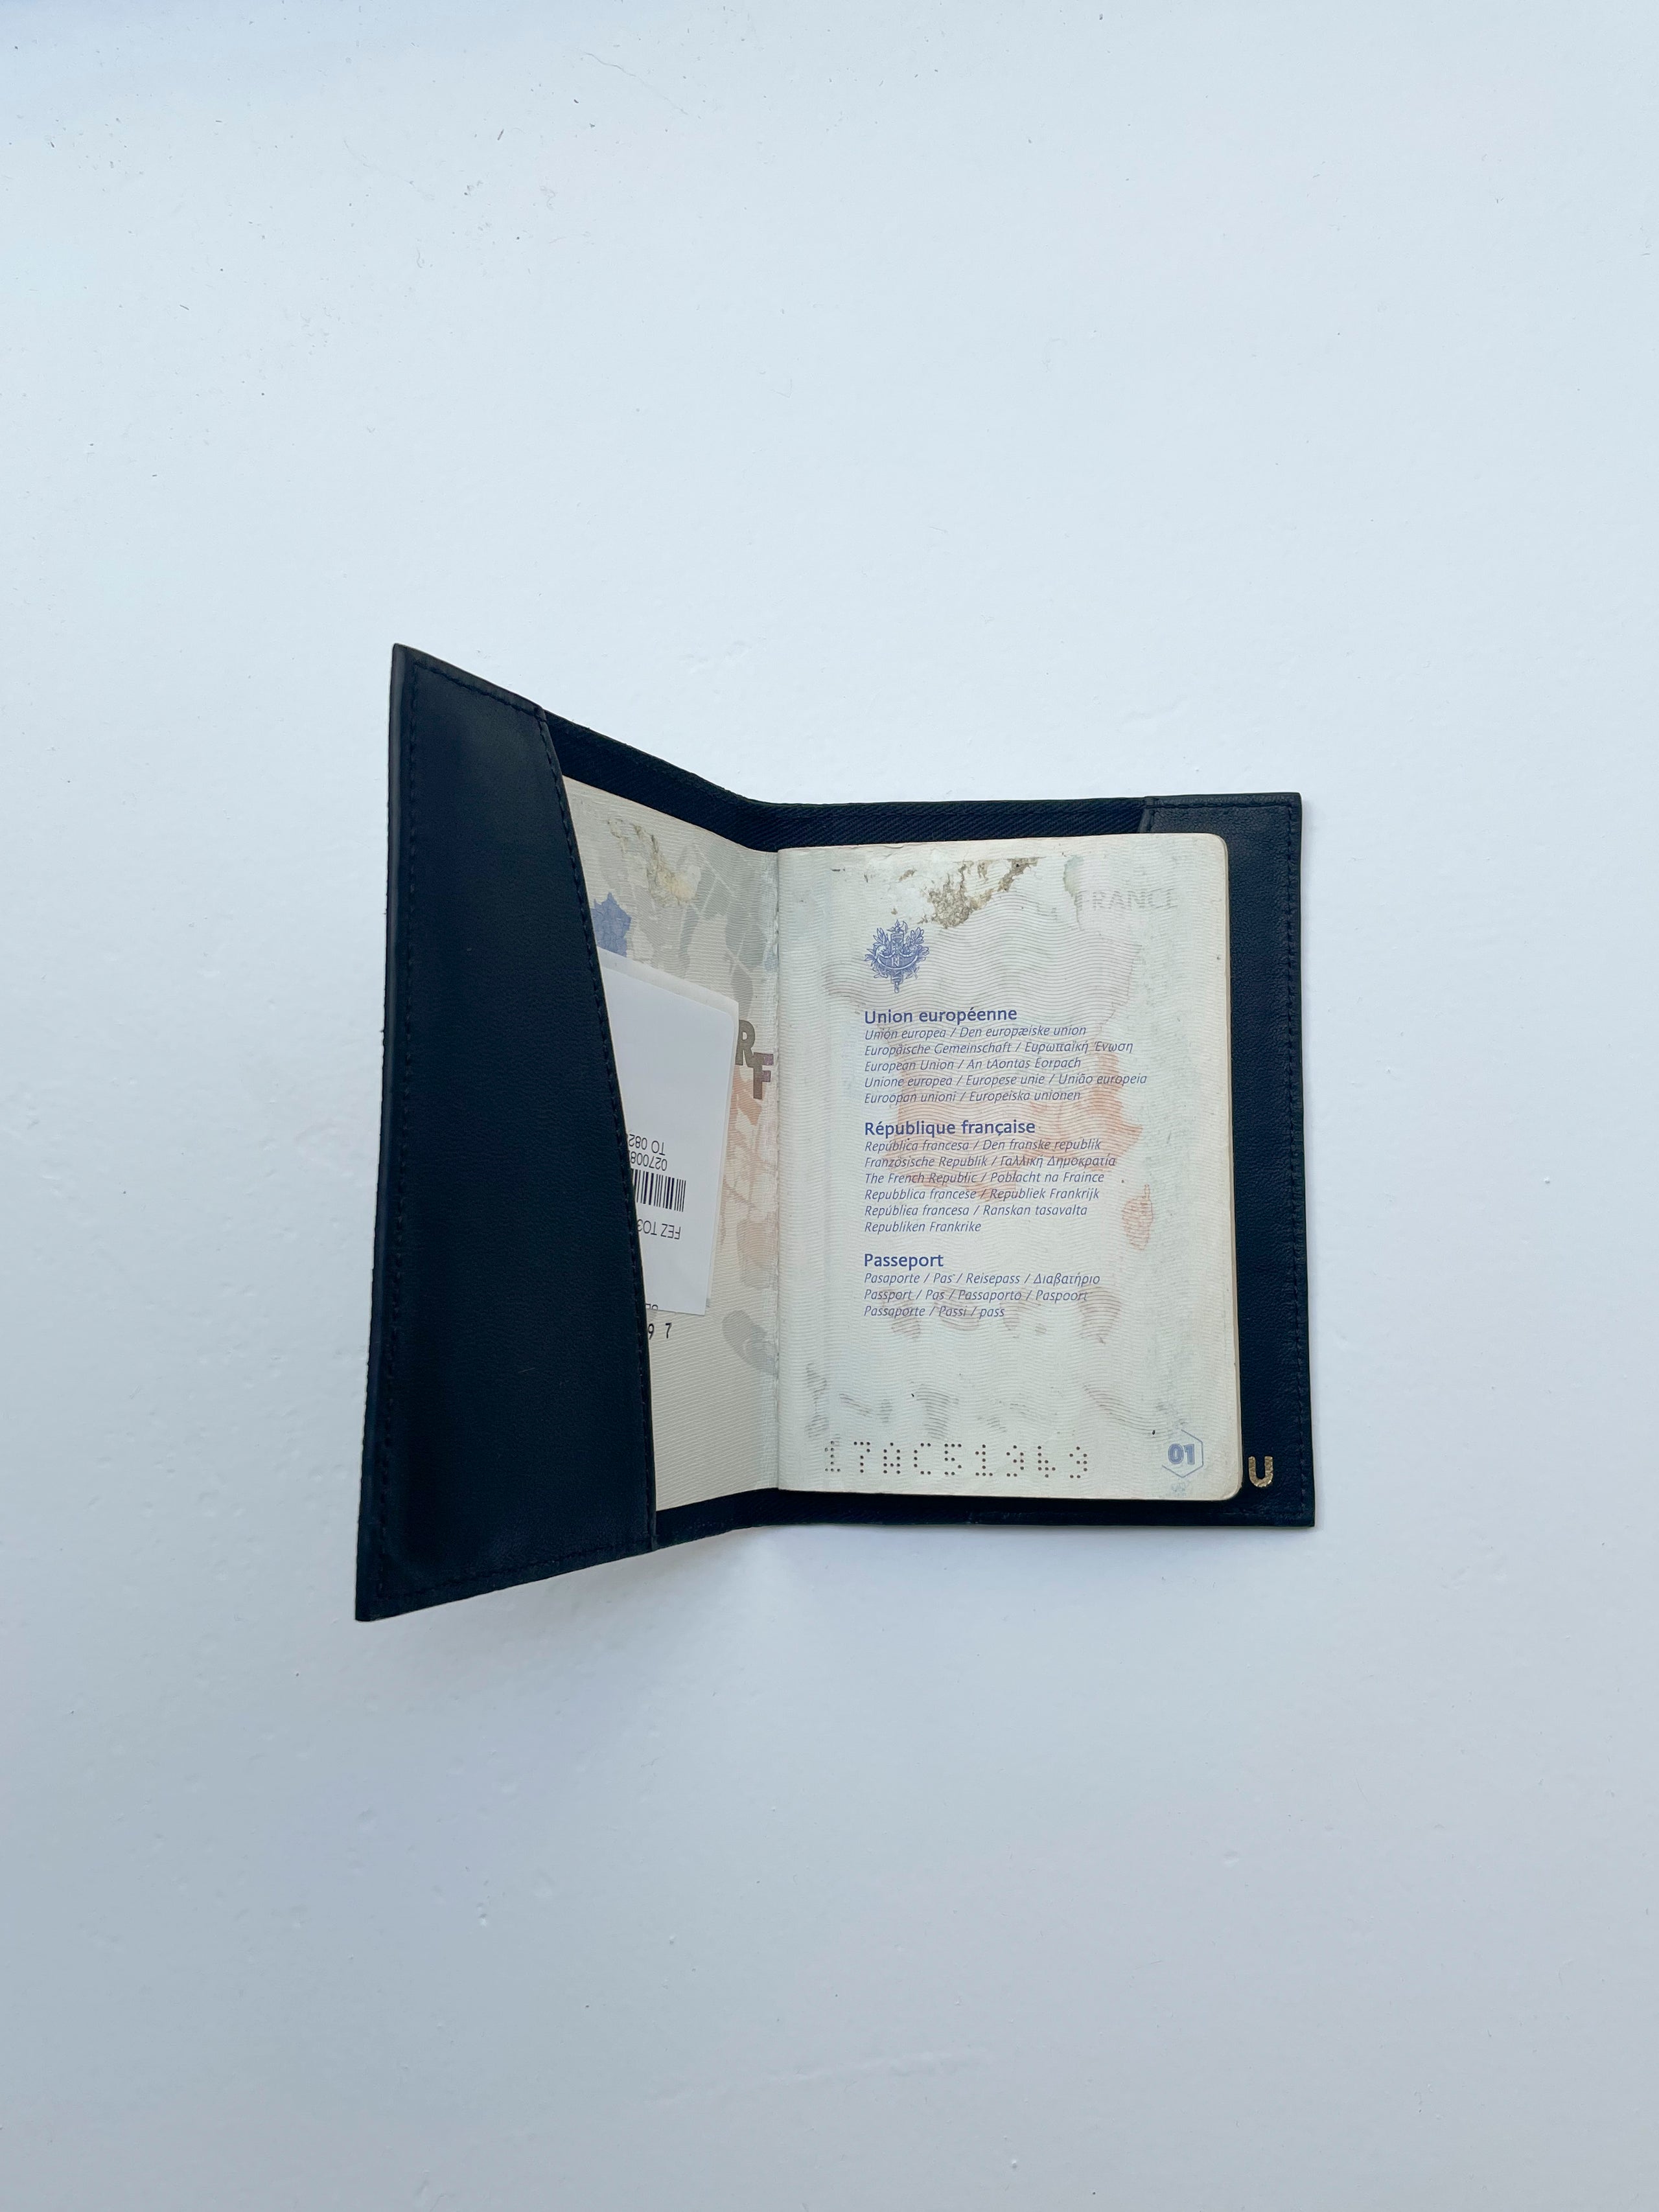 The Black Passport Cover